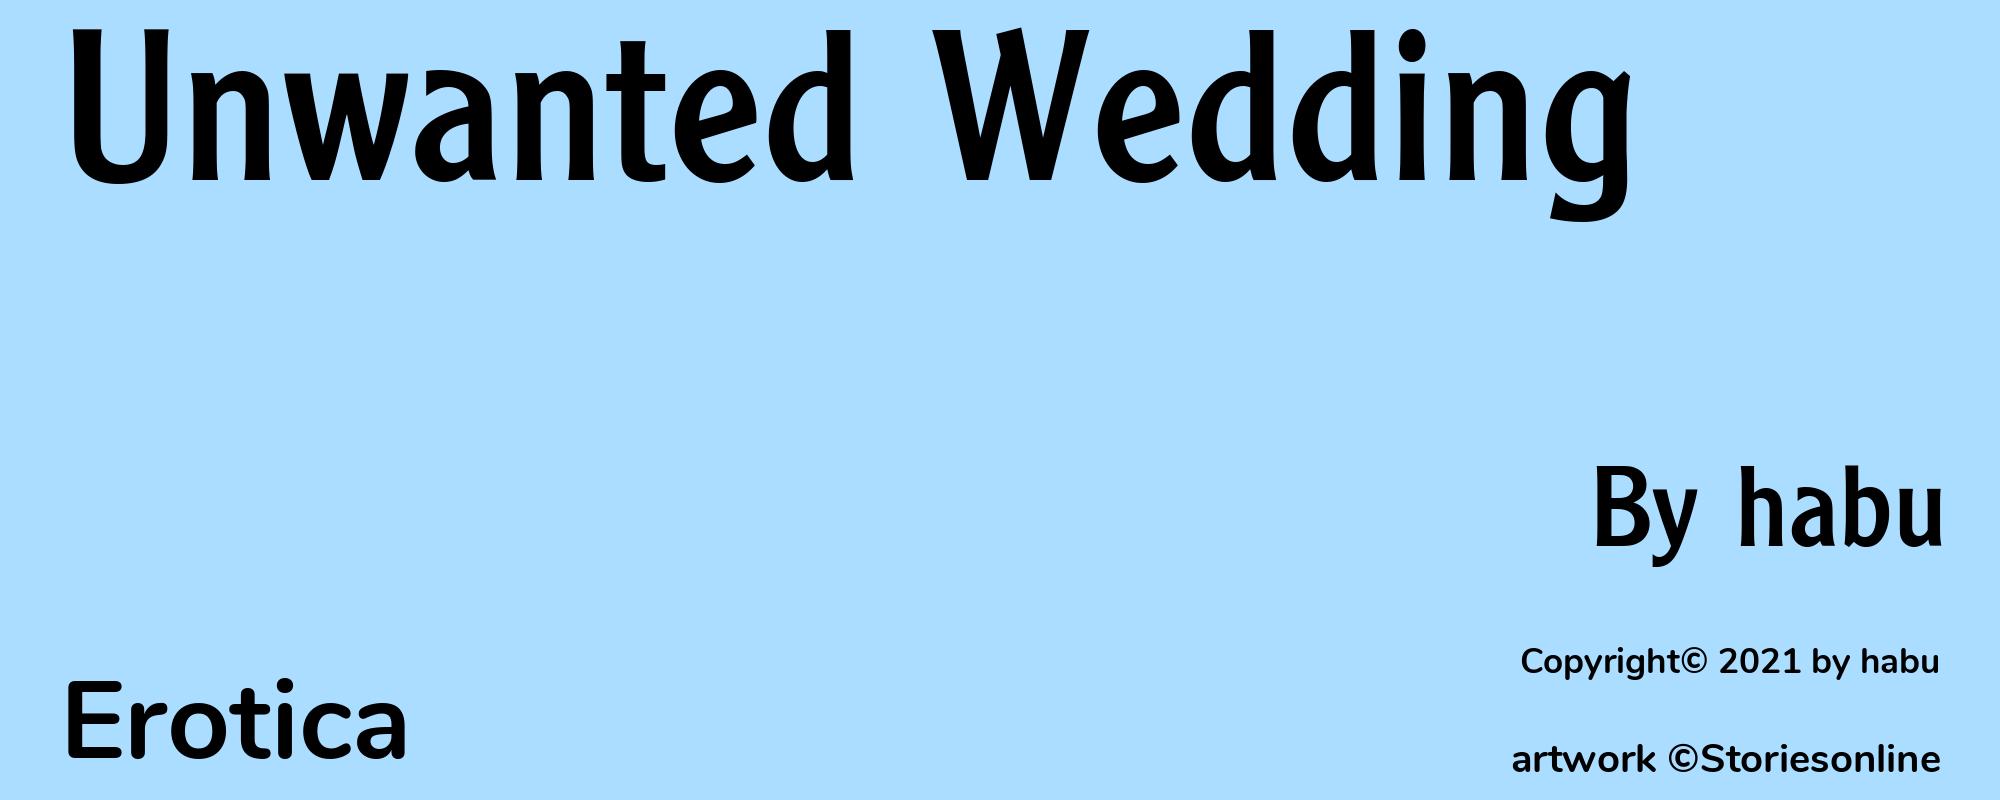 Unwanted Wedding - Cover